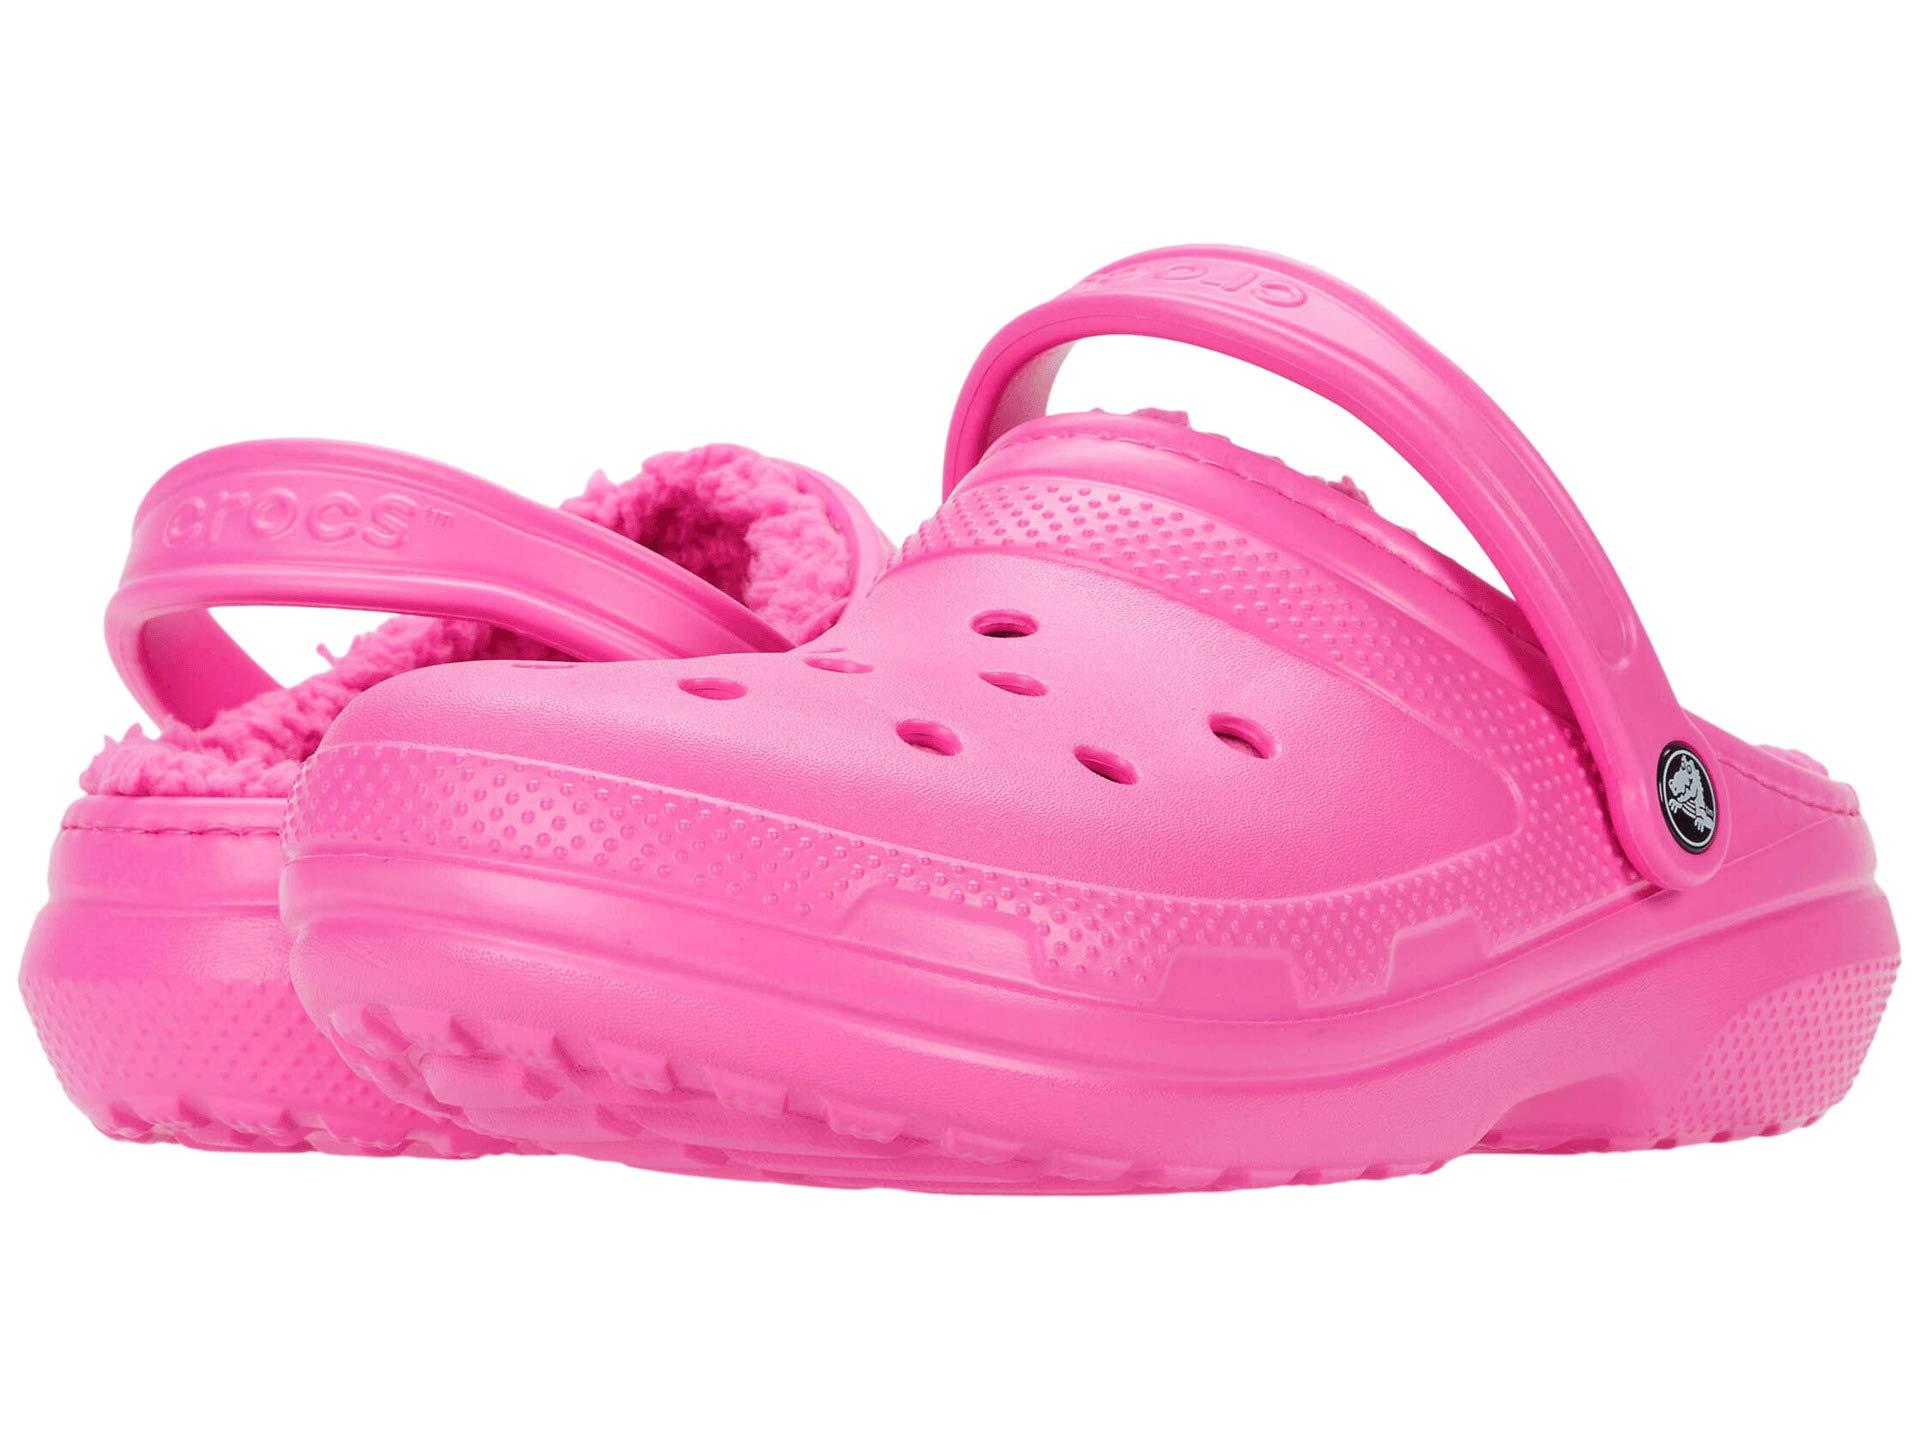 crocs with fur pink